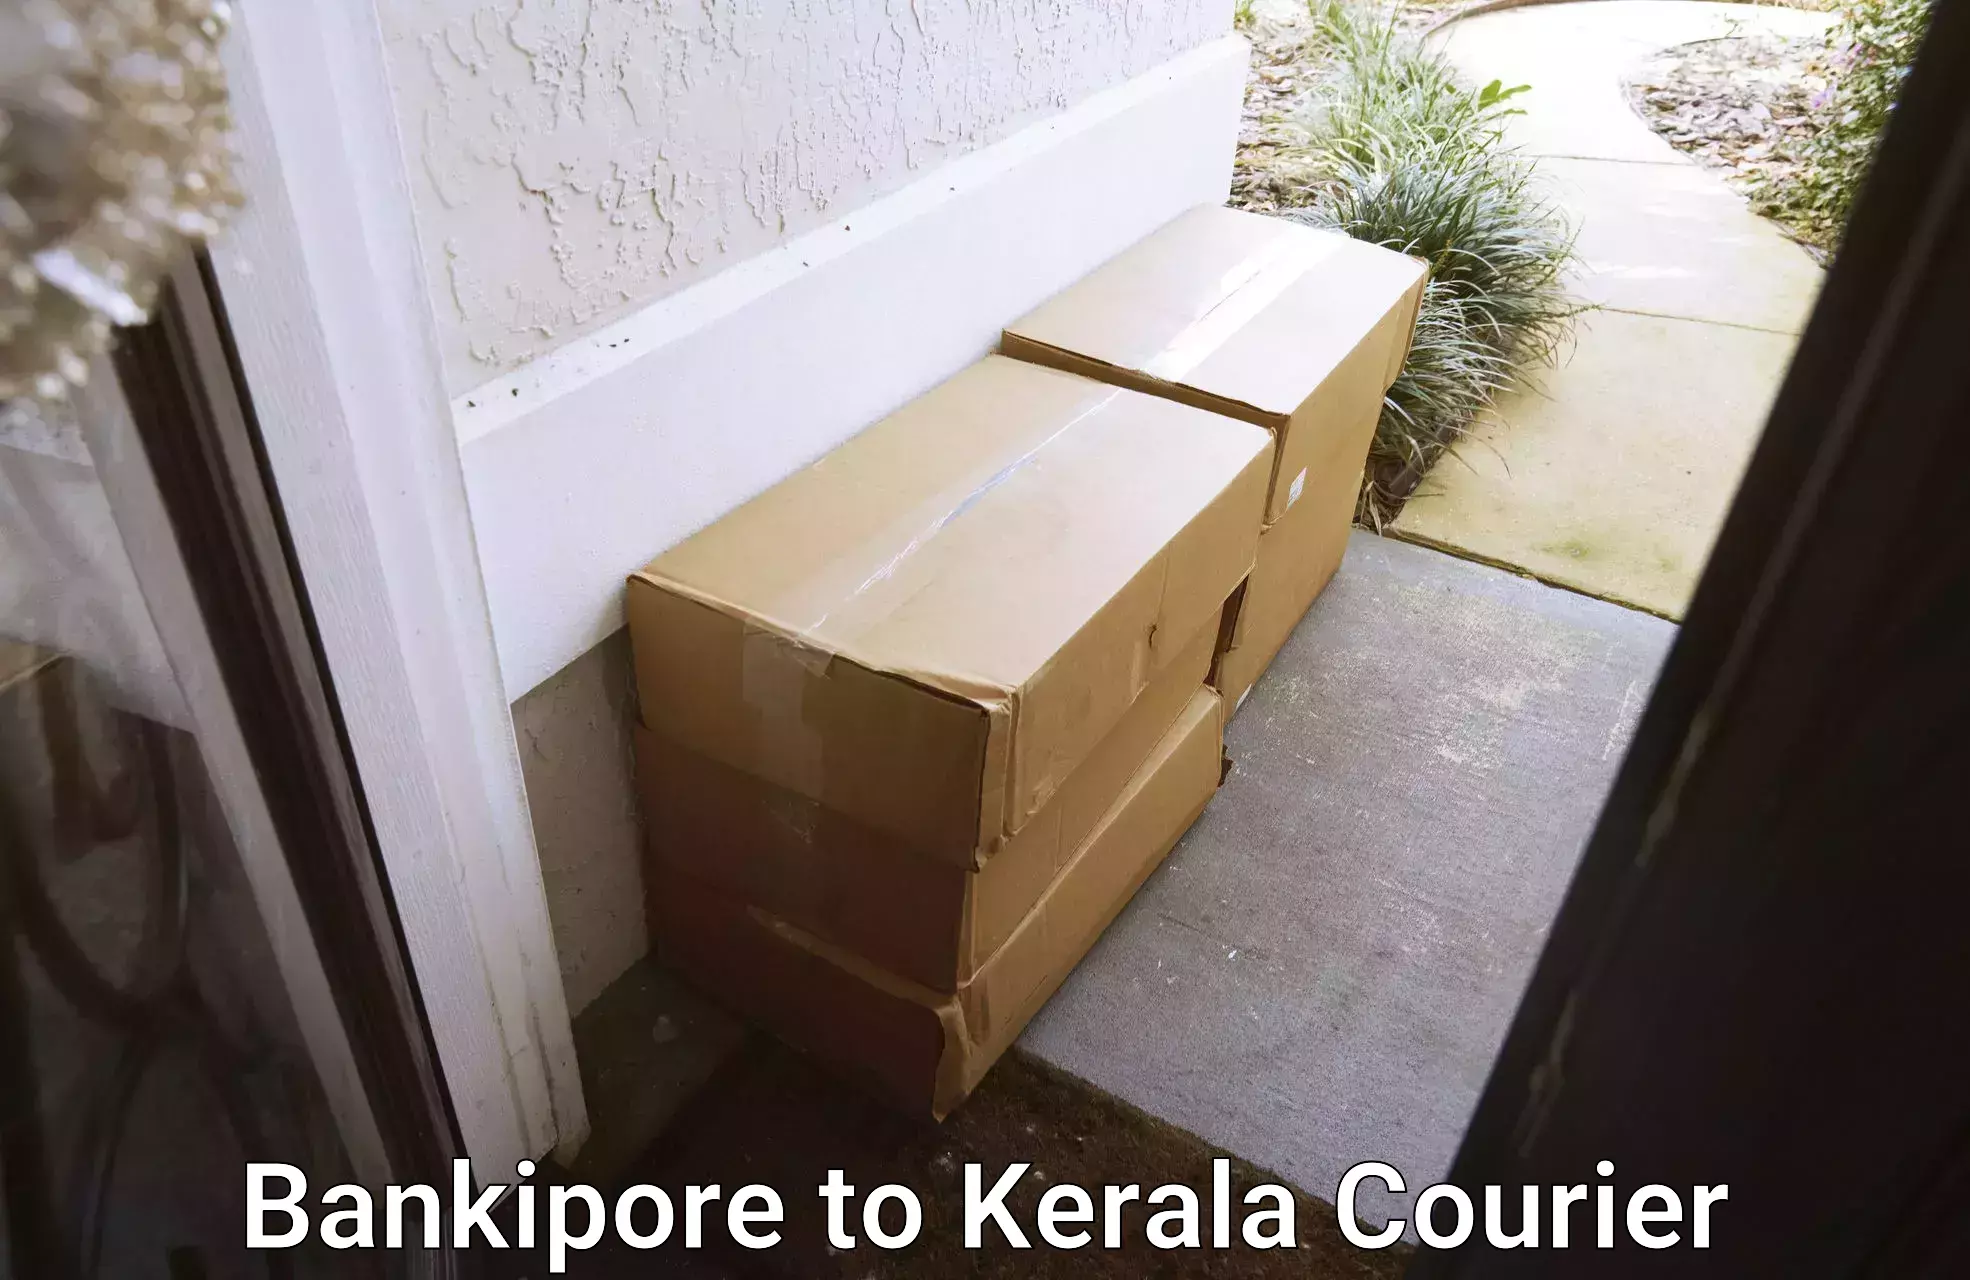 Full-service movers Bankipore to Kerala